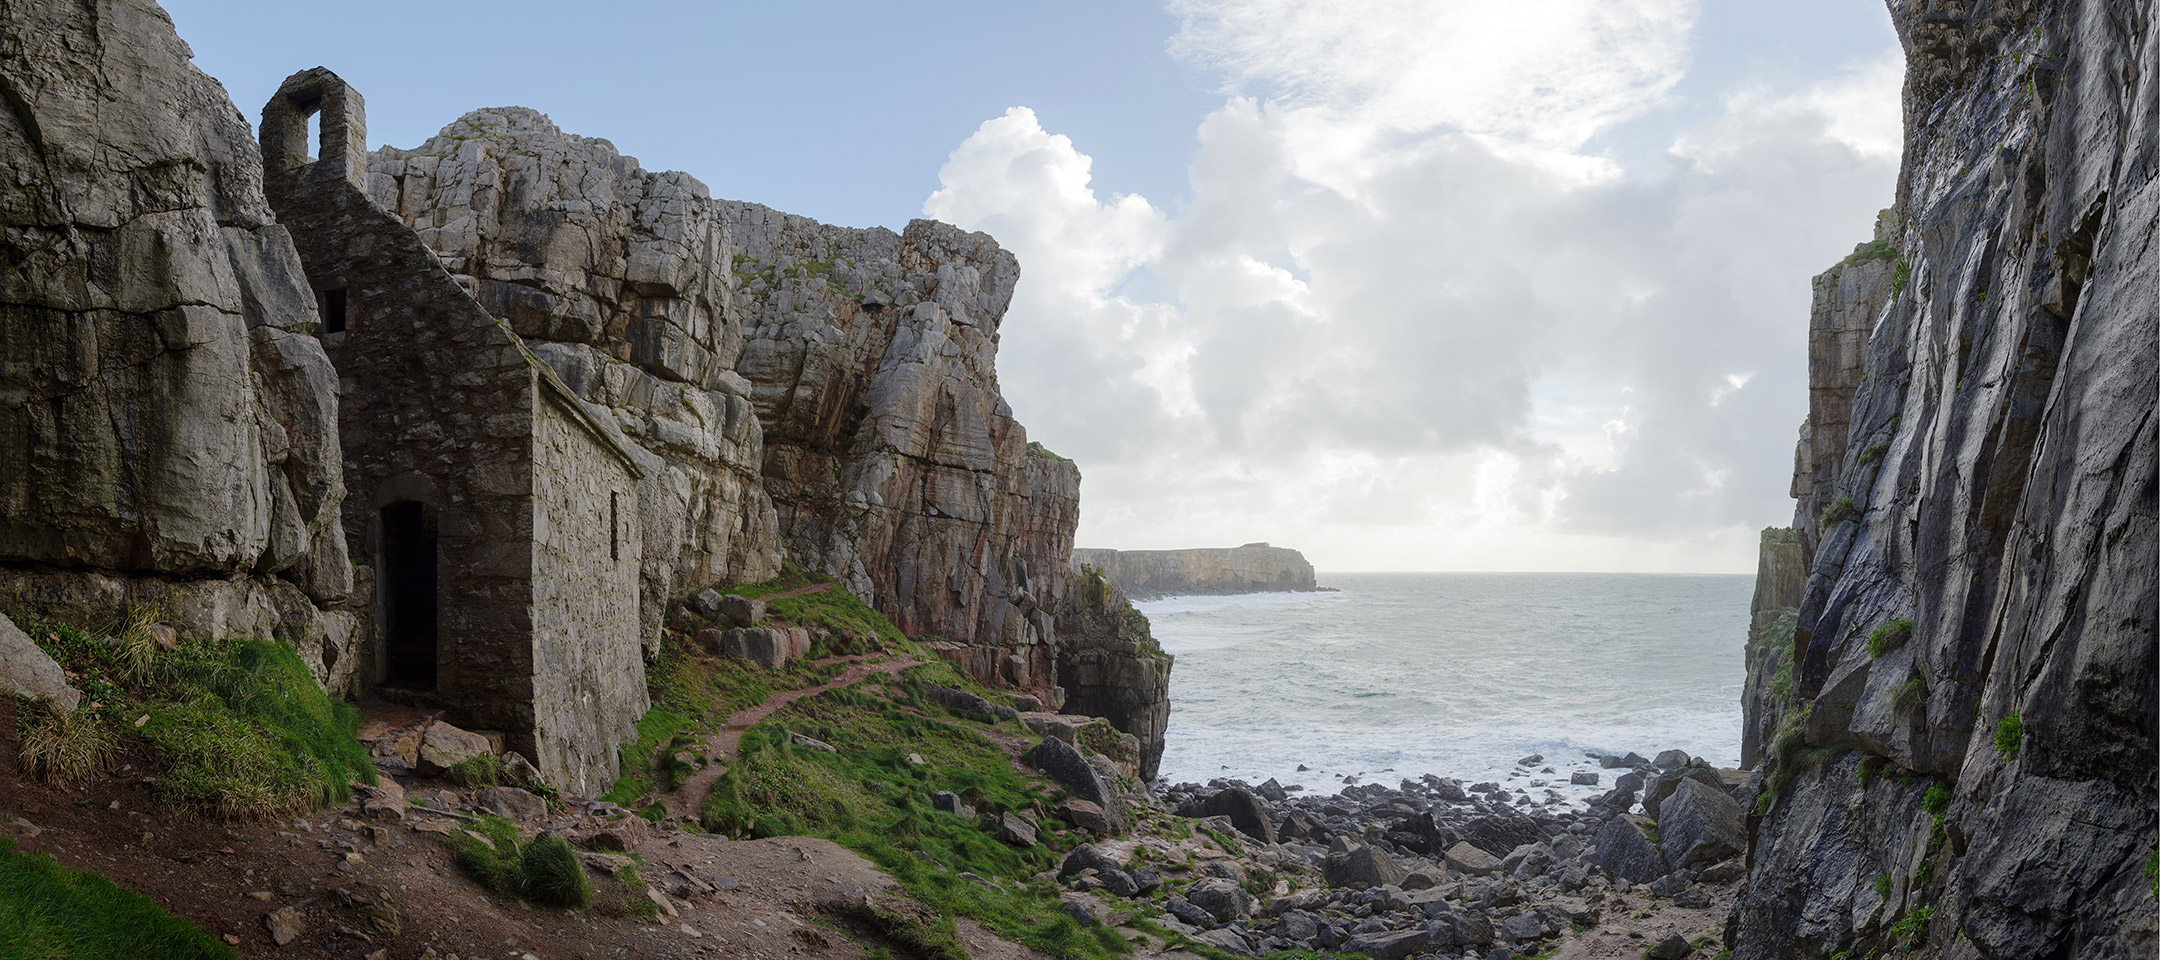 The little chapel of St Govan overlooks impressive cliffs along the Pembroke Coast, Wales